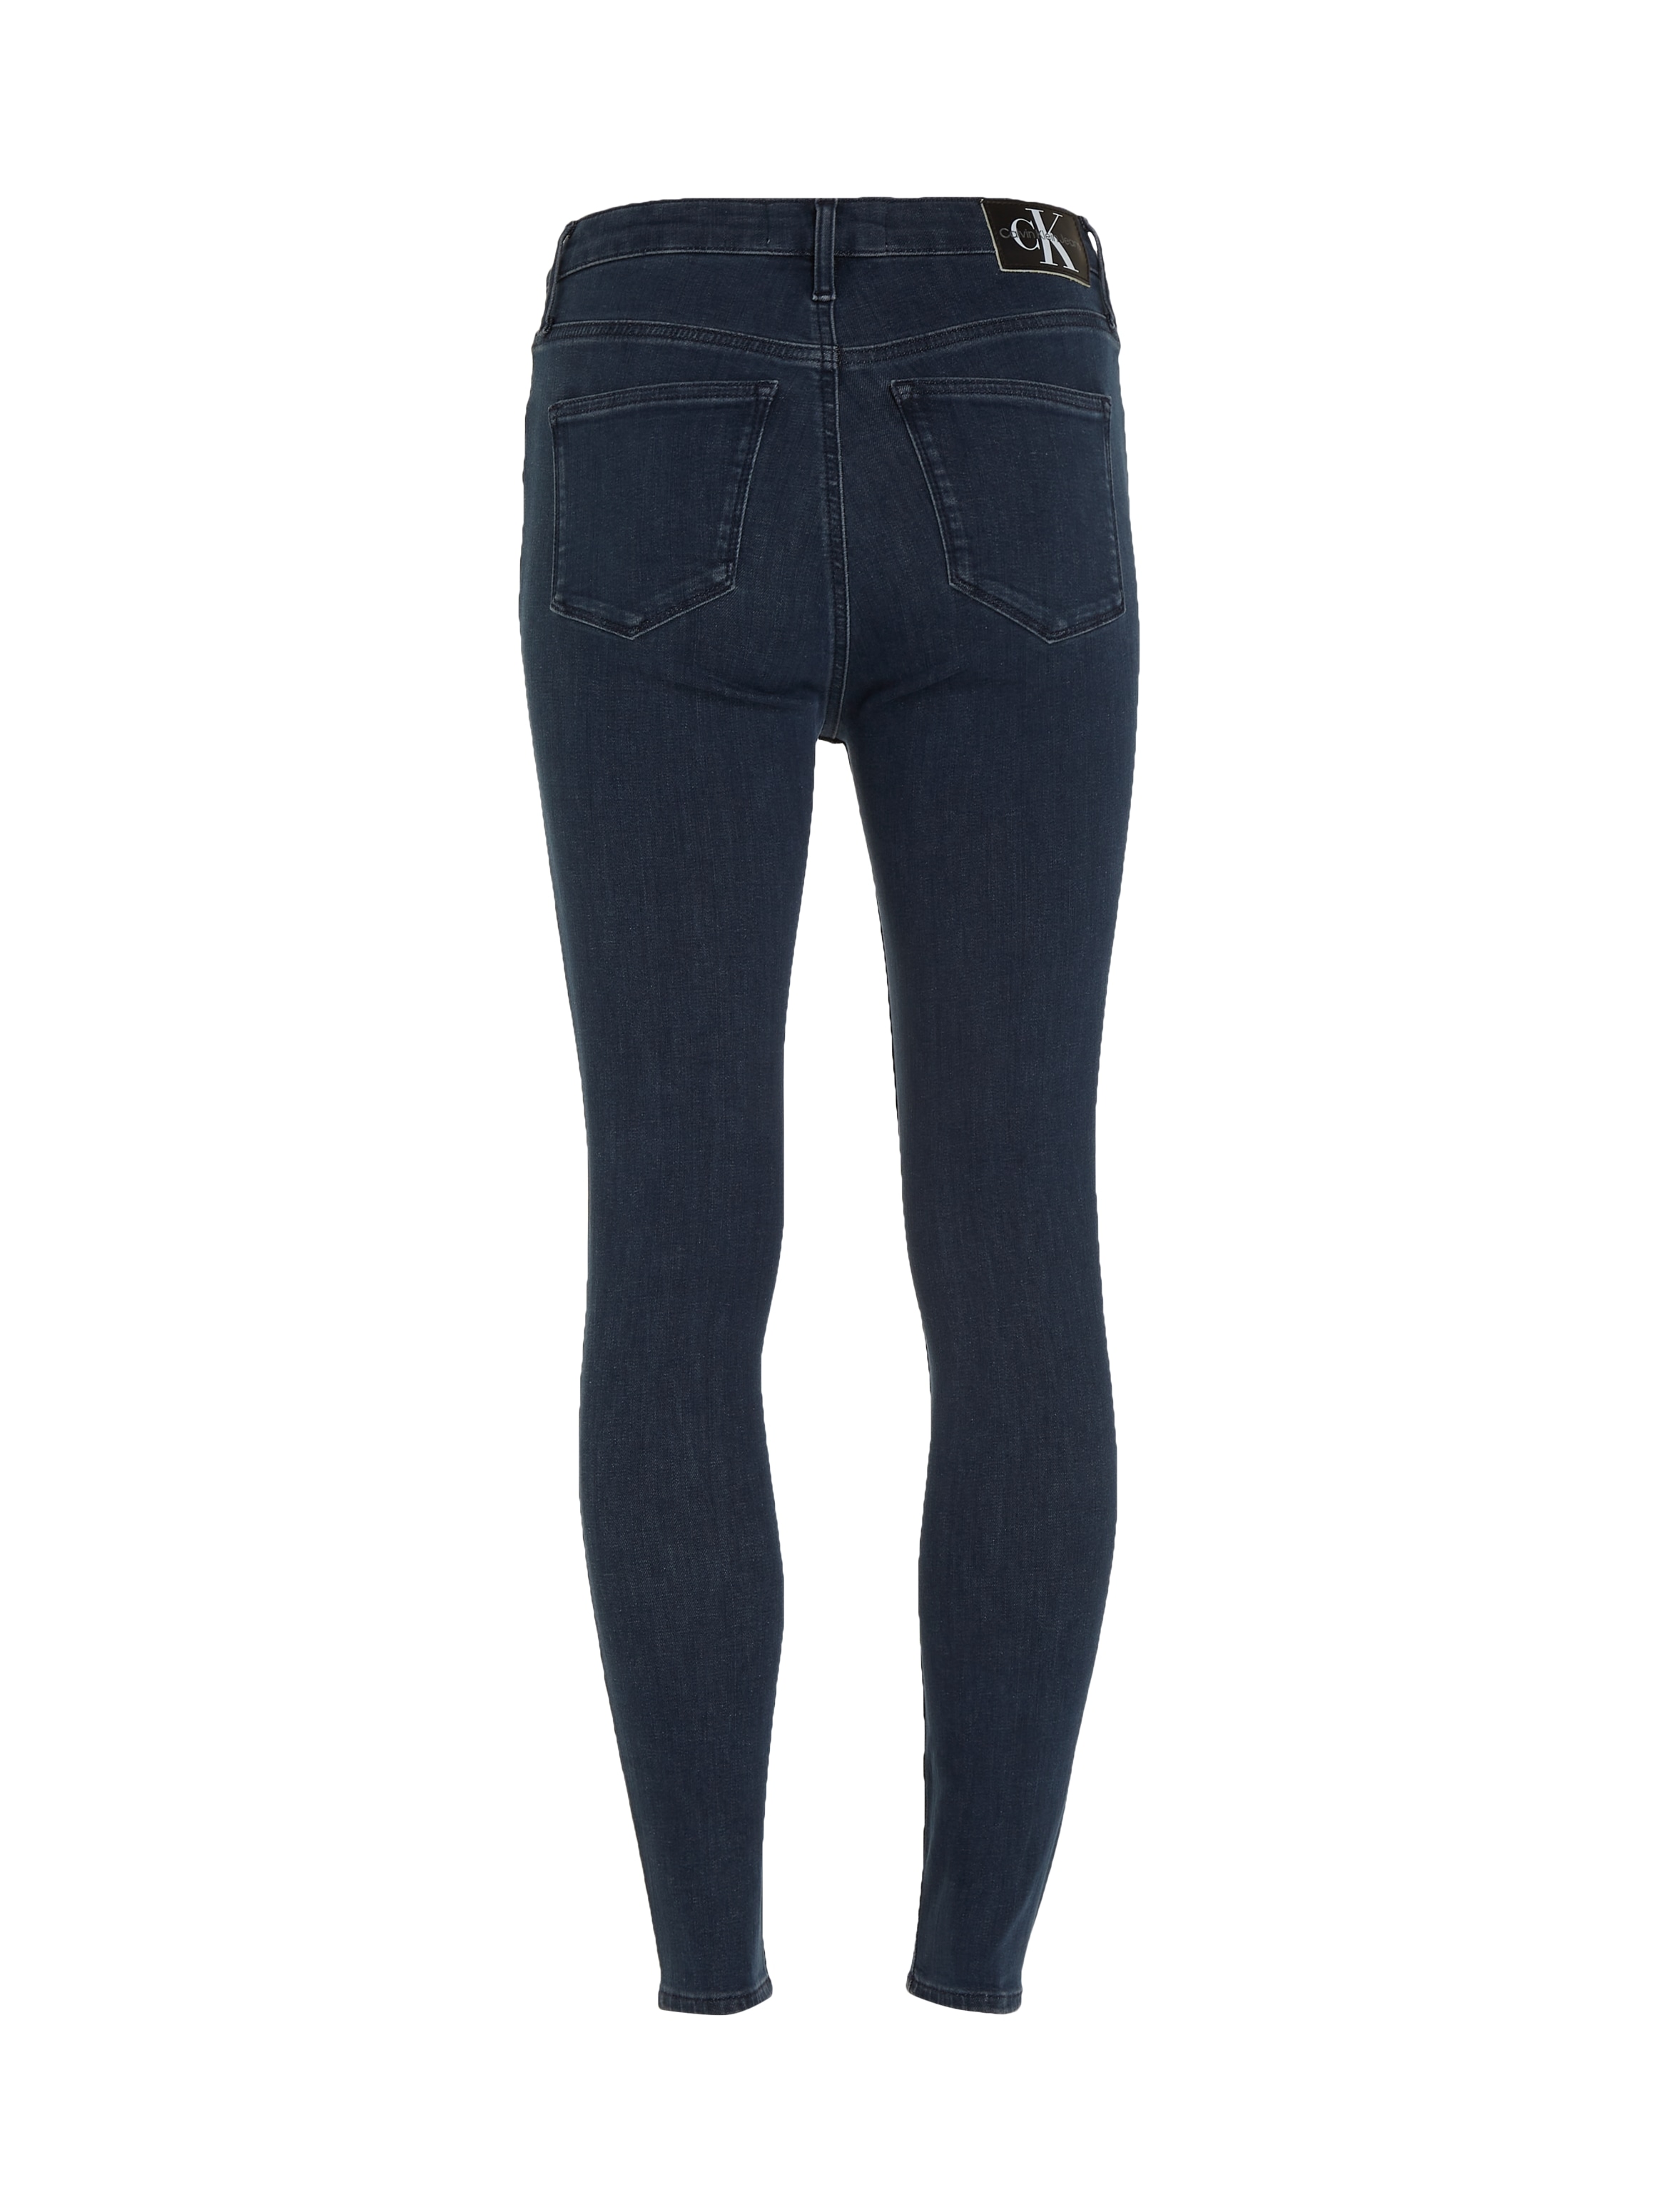 Calvin Klein Jeans Ankle-Jeans »HIGH RISE SUPER SKINNY ANKLE«, mit hohem Bund